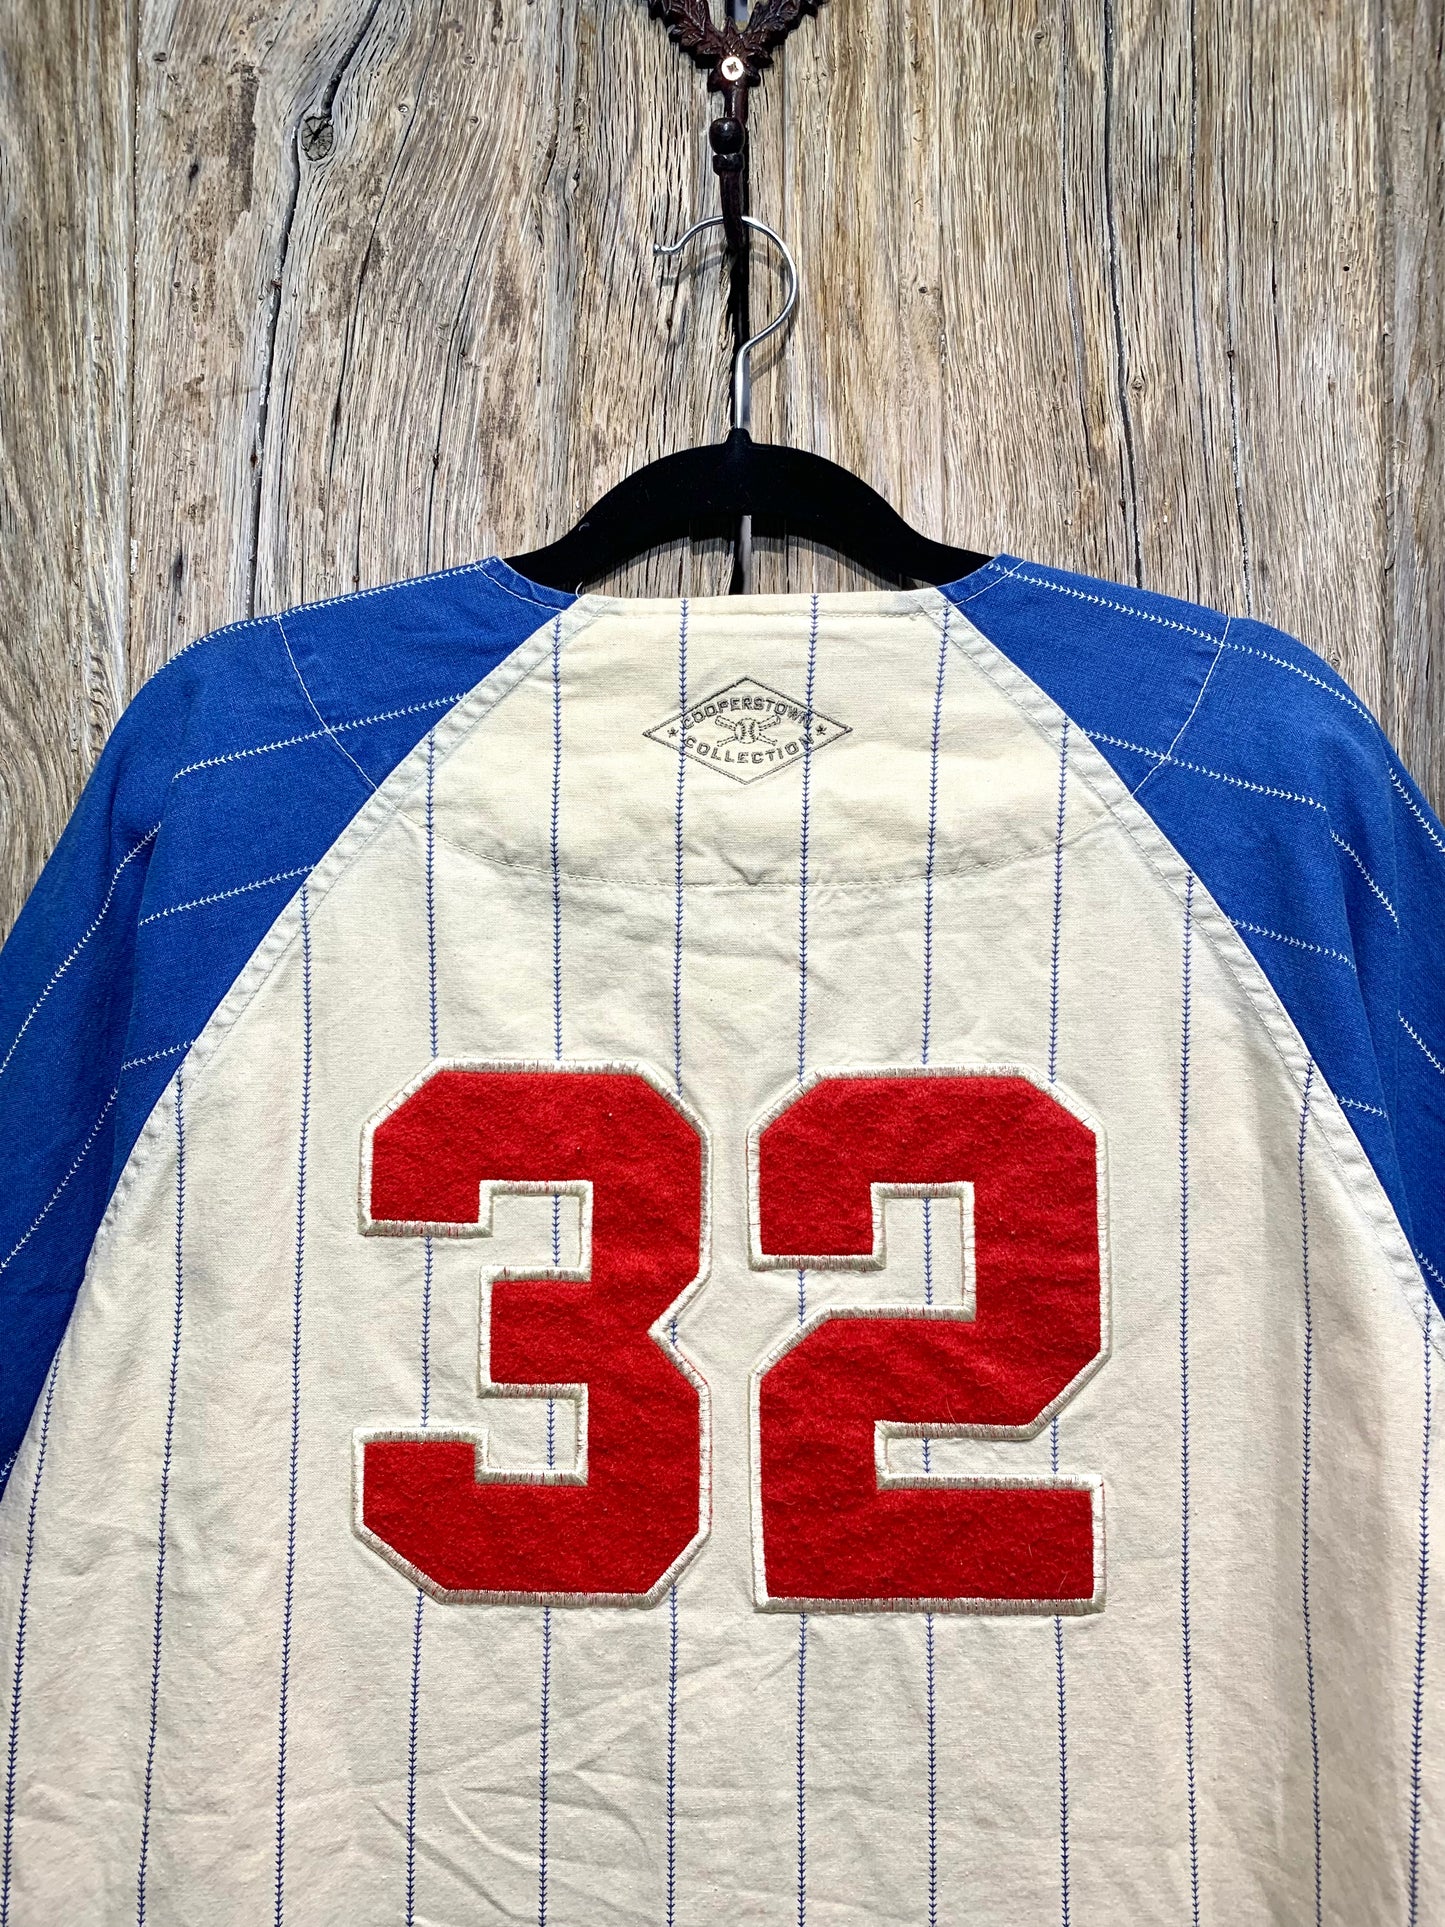 Vintage L.A Dodgers Baseball Jersey